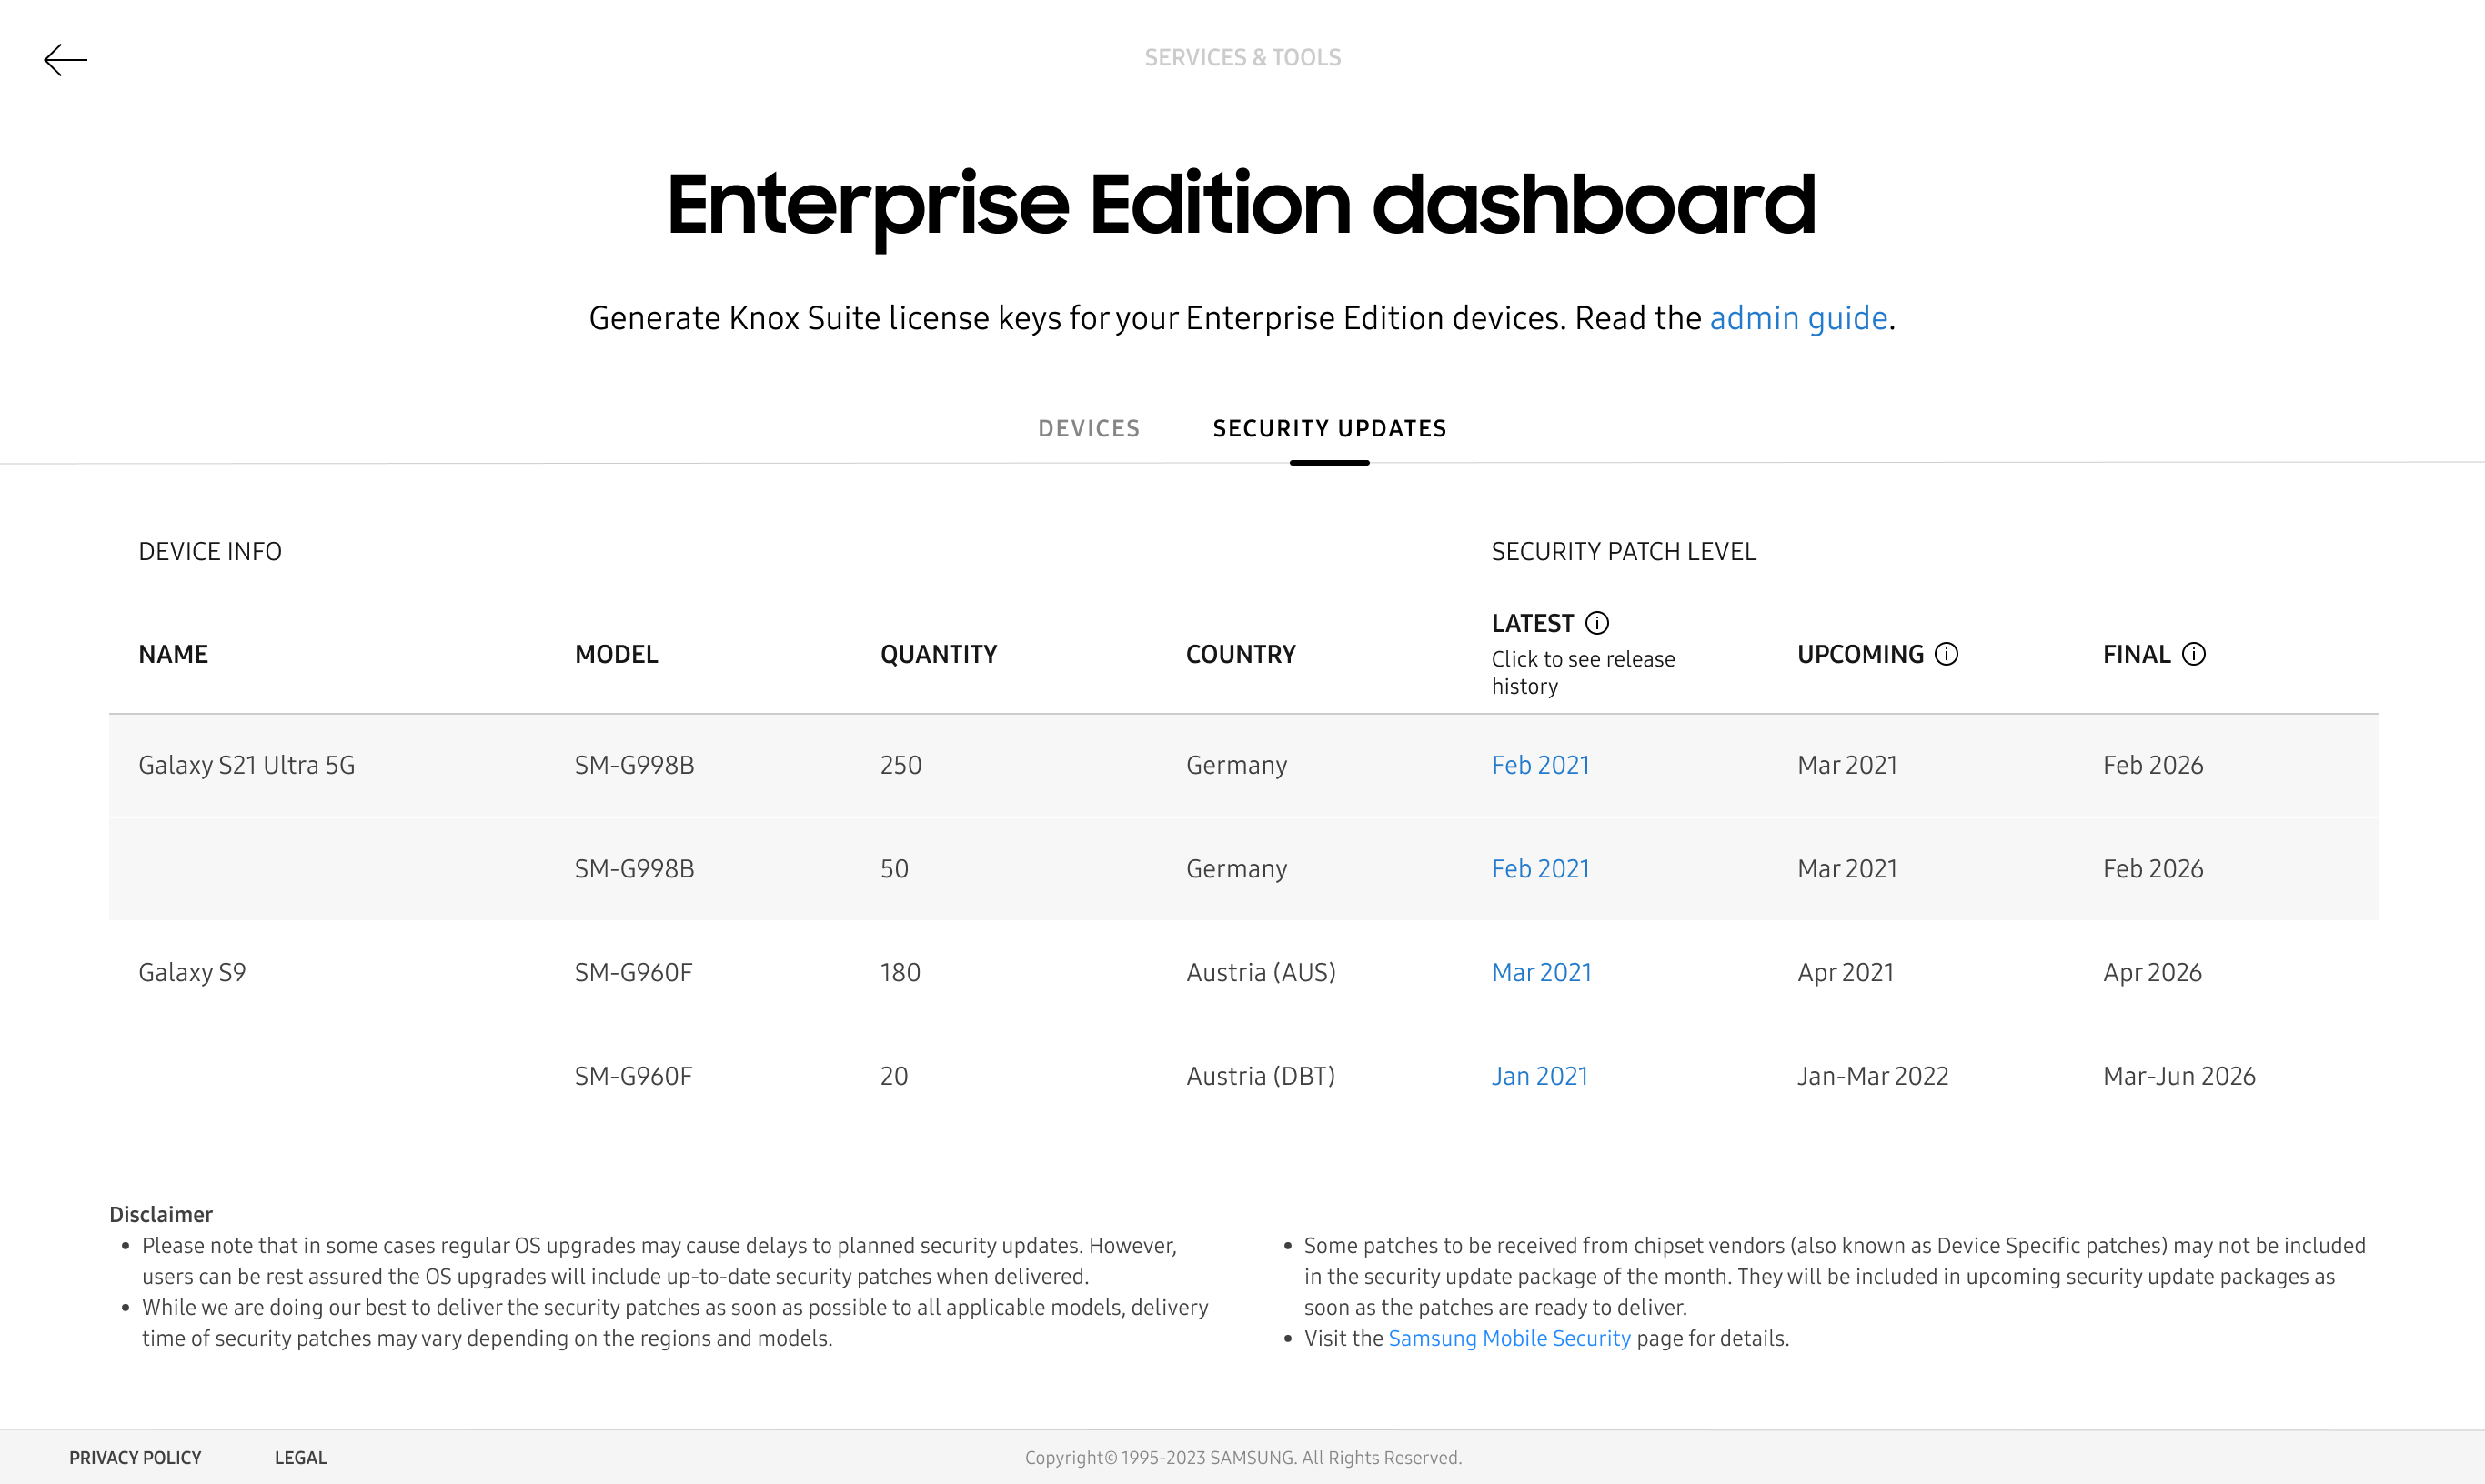 Enterprise edition dashboard security updates